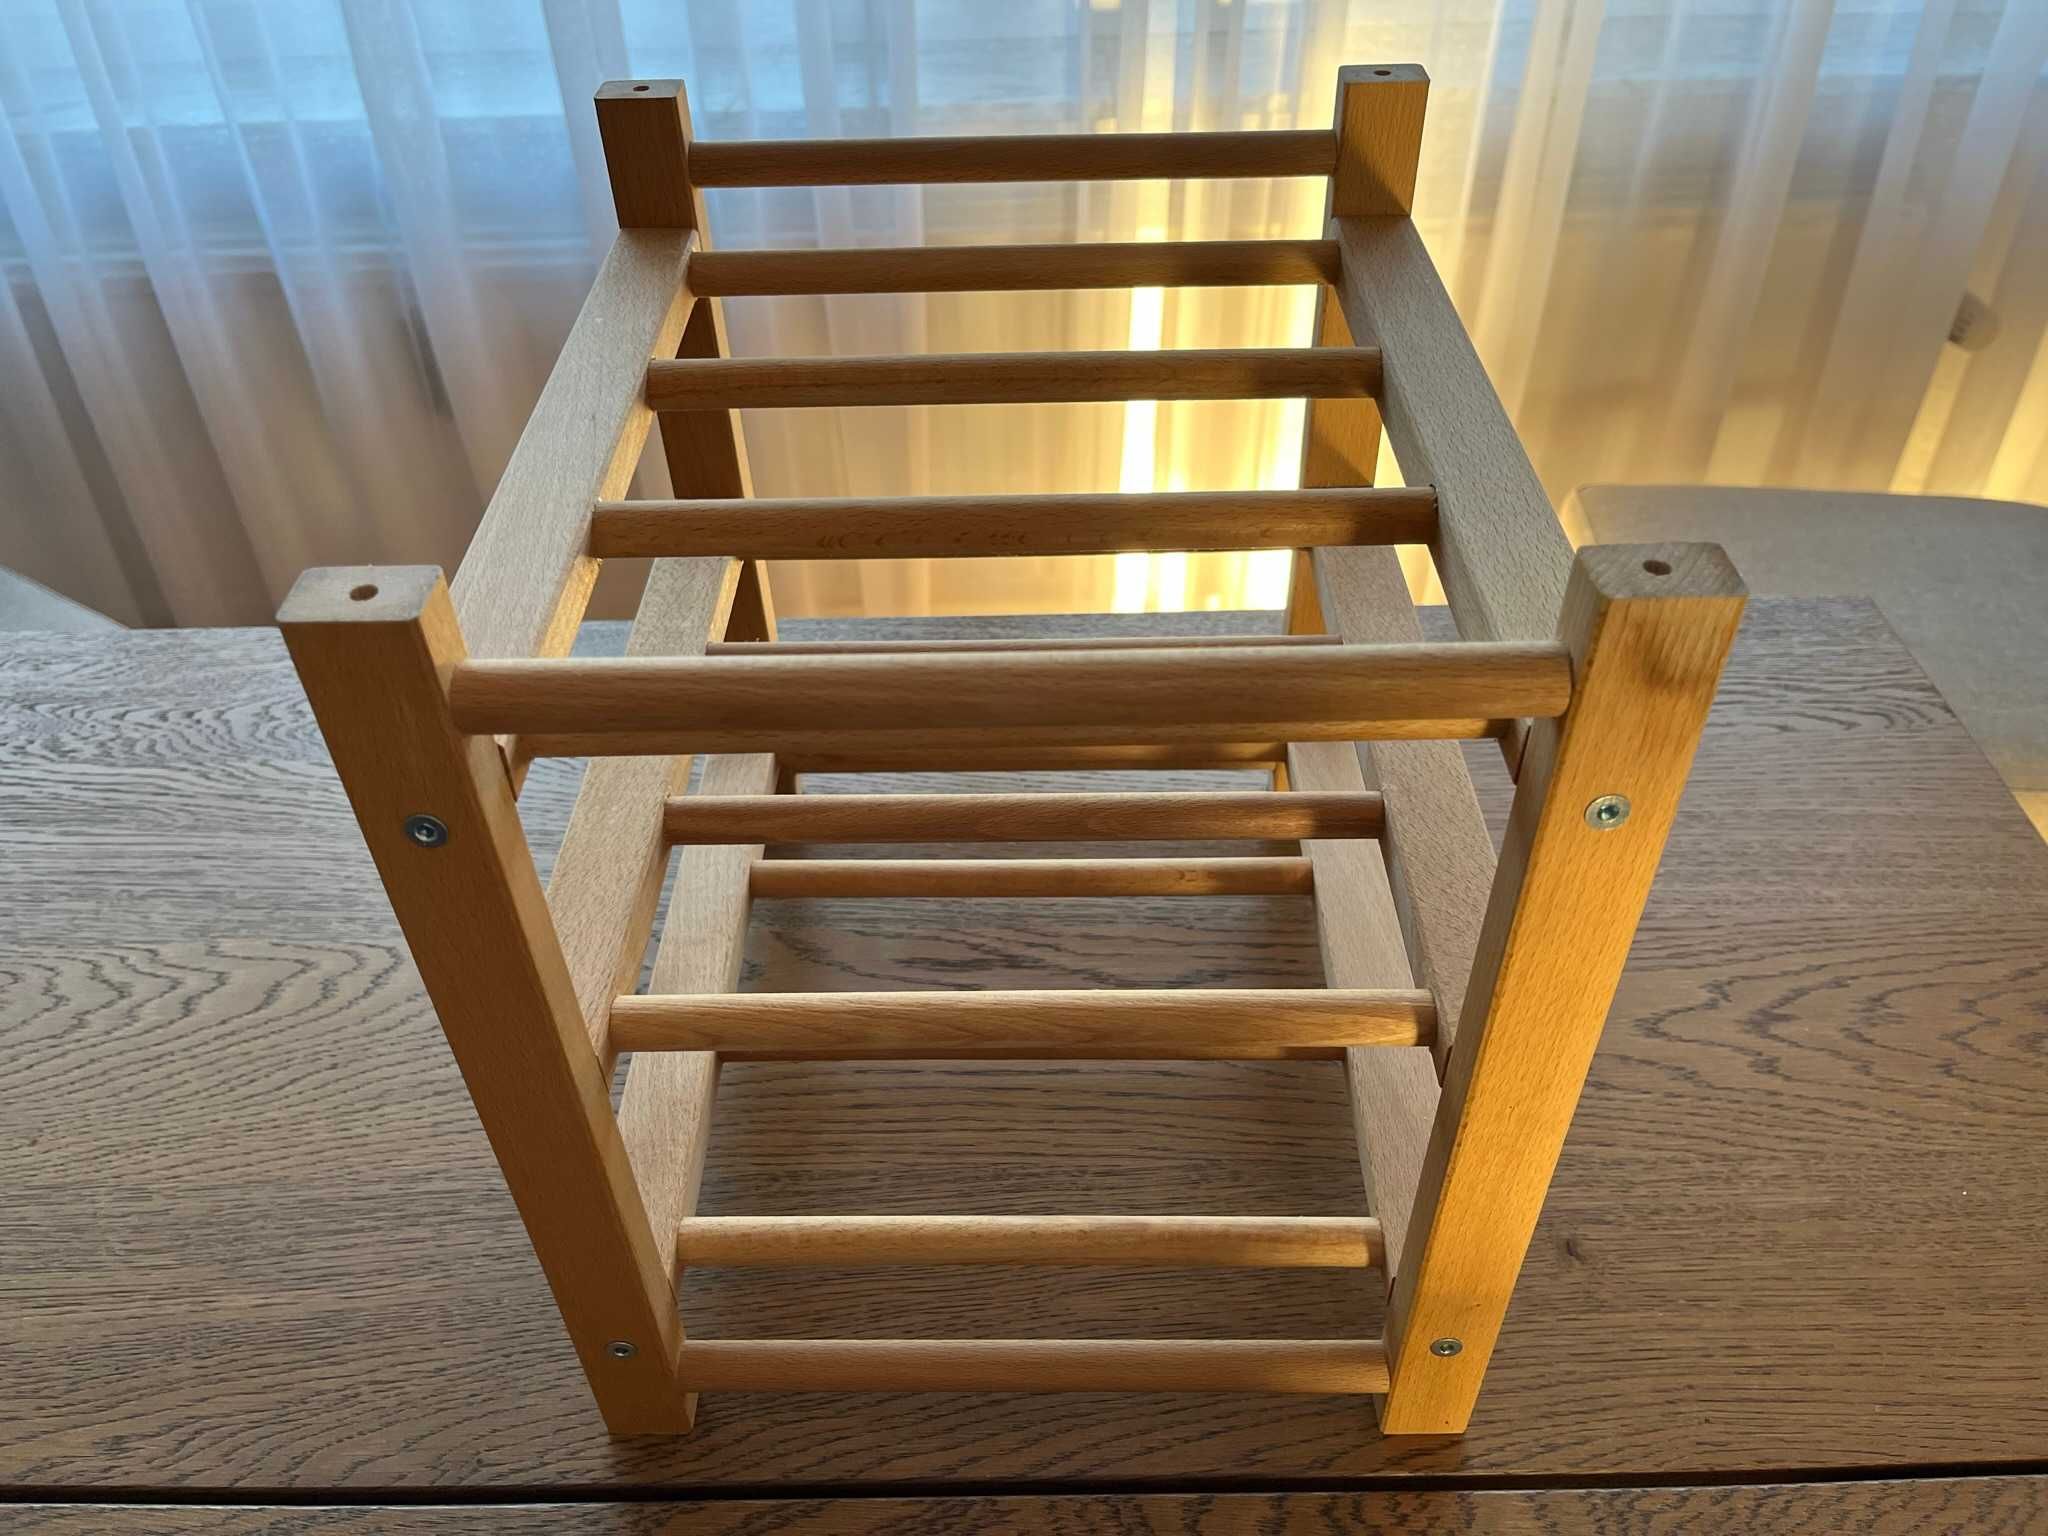 Stojak na wina IKEA, lite drewno, zaolejowany – model HUTTEN